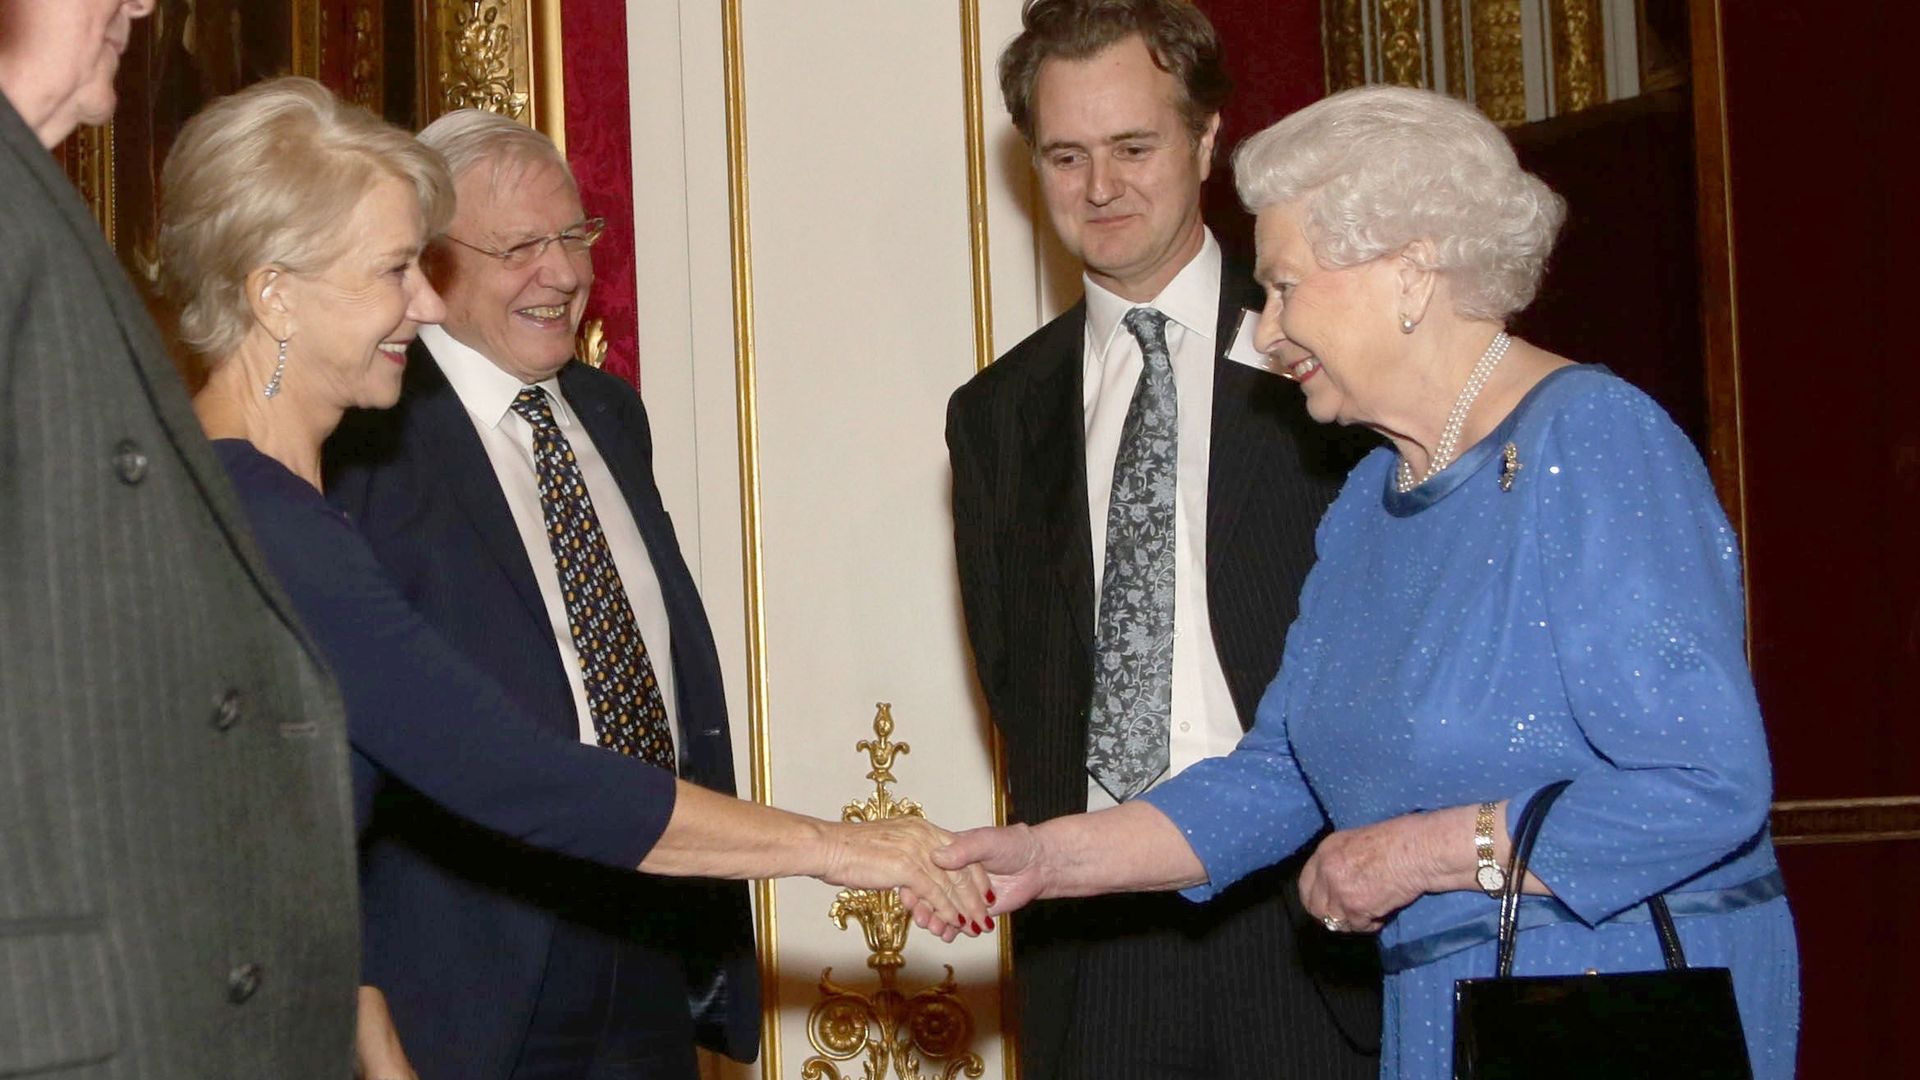 Queen Elizabeth II Hosts Dramatic Arts Reception At Buckingham Palace